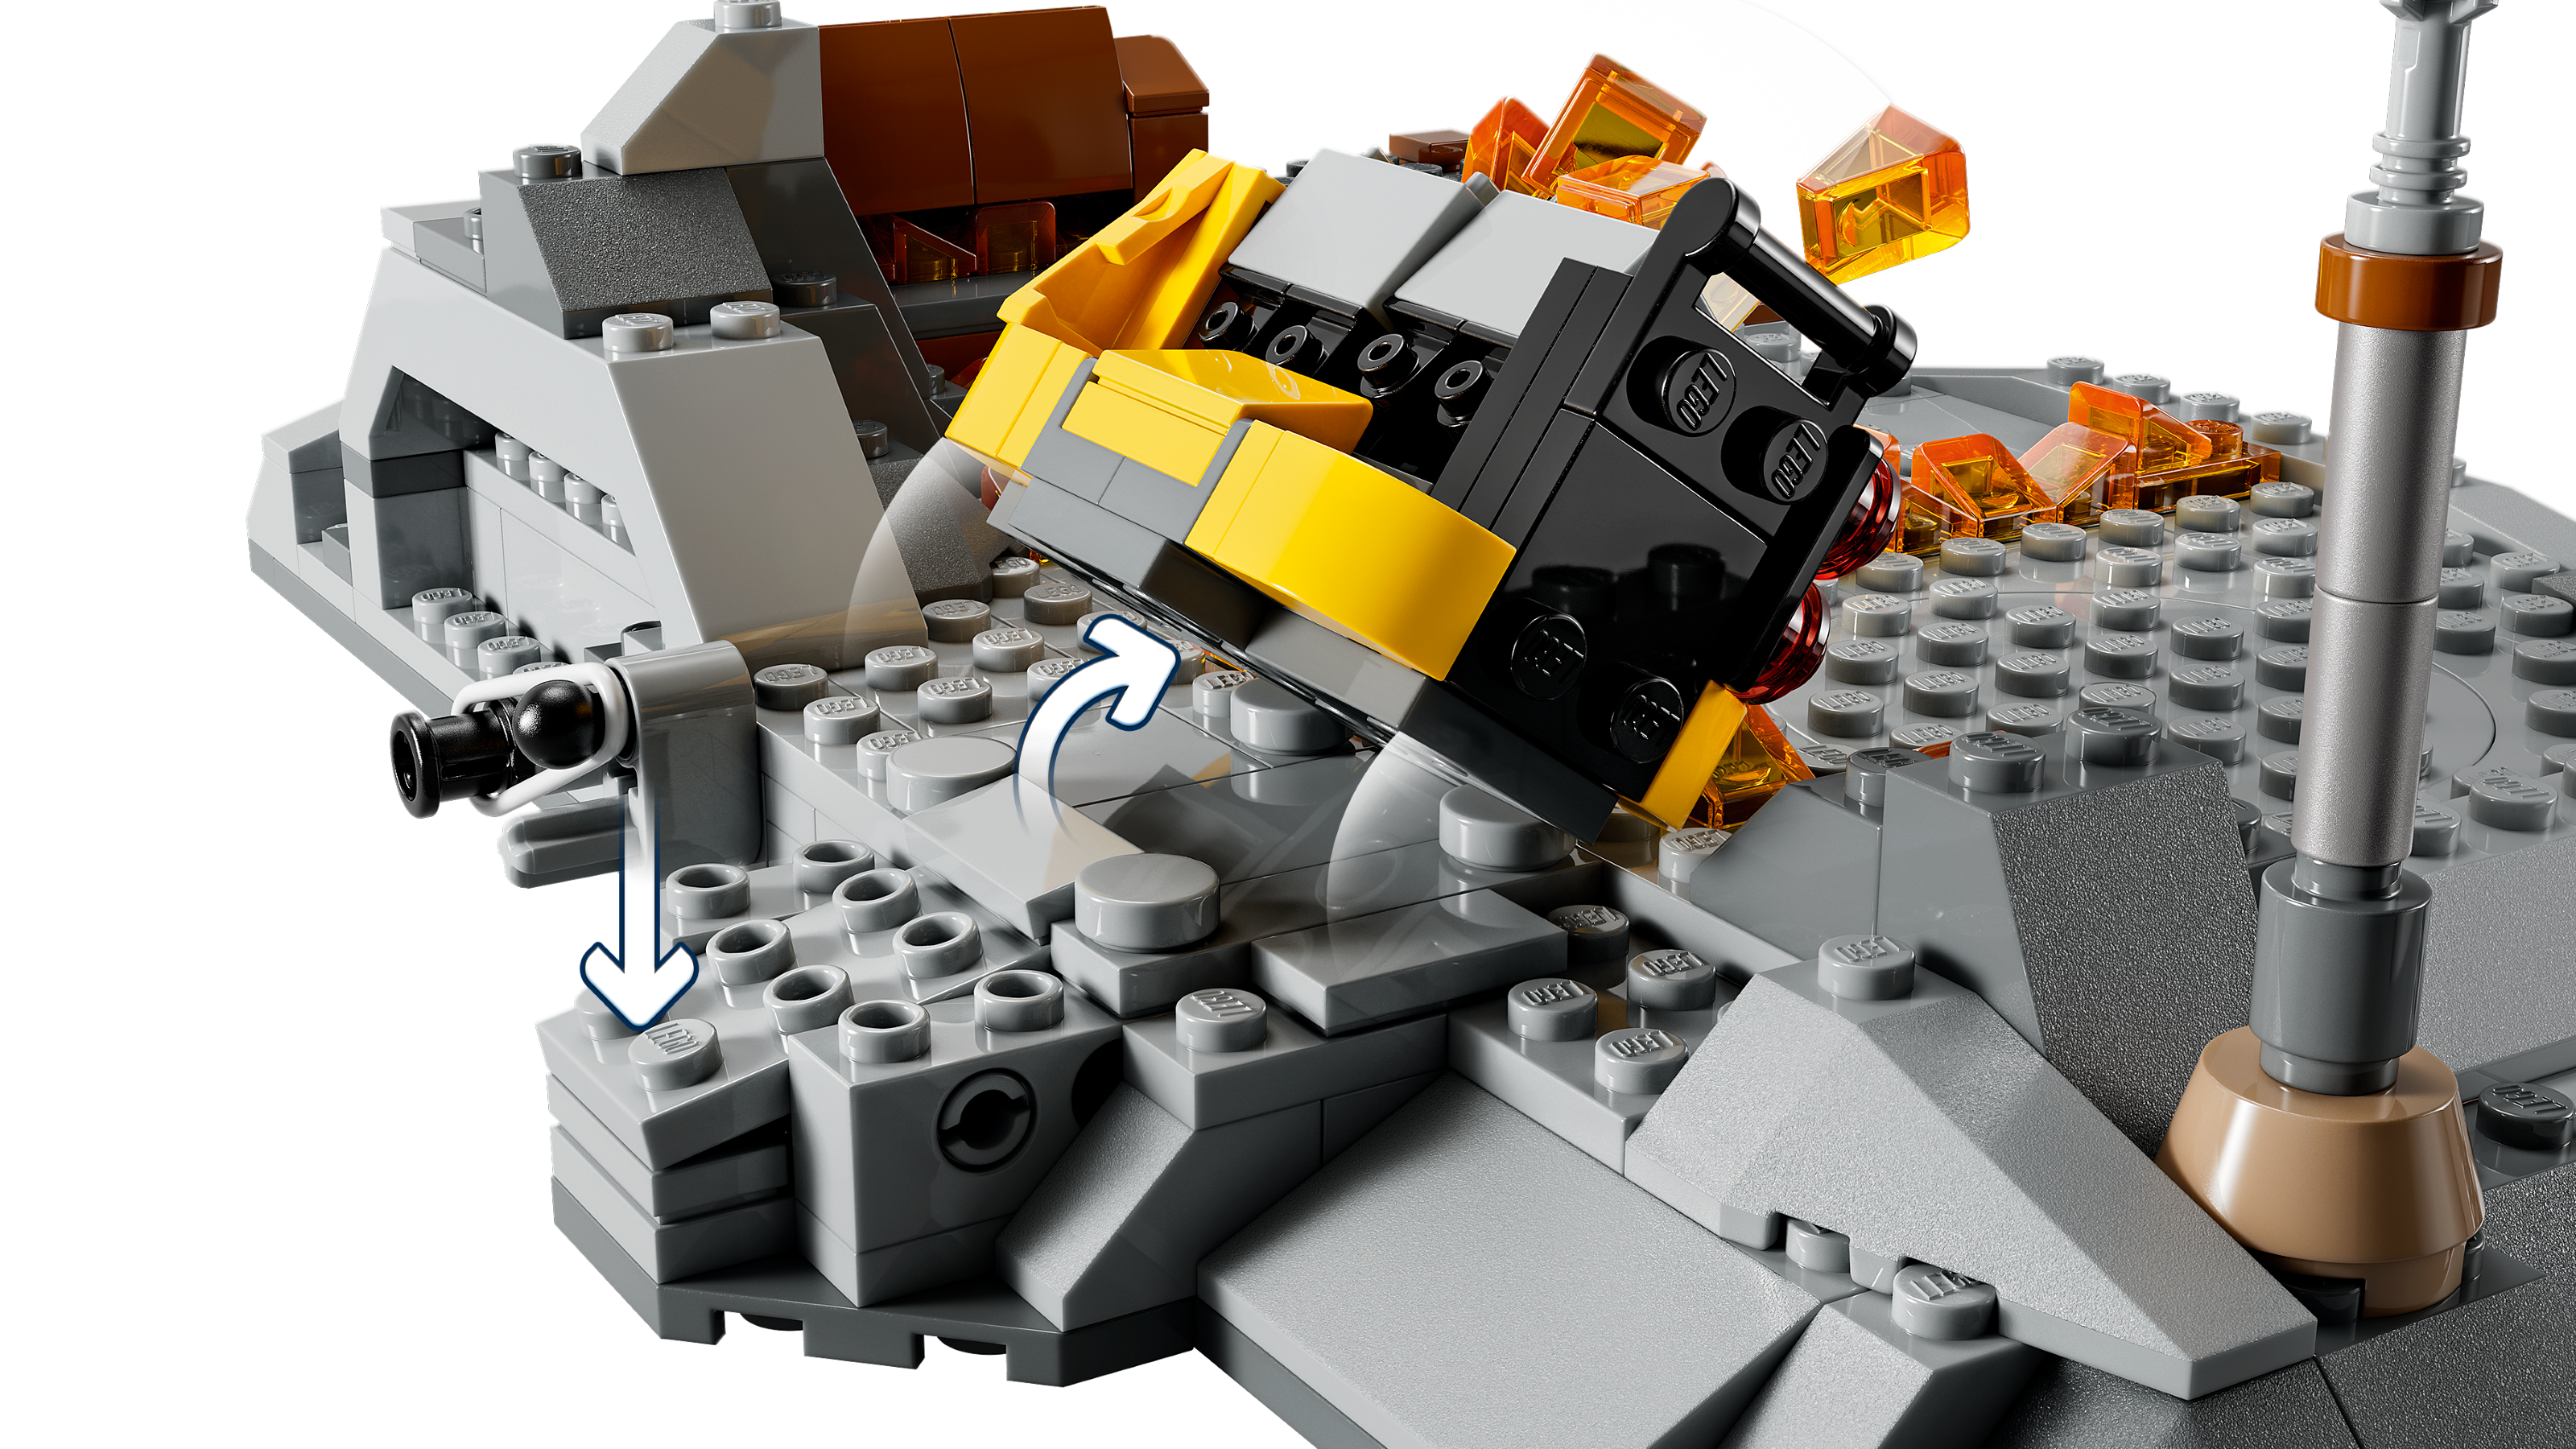 Lego - LEGO® Star Wars™ - Dark Vador™ - 75534 - Briques Lego - Rue